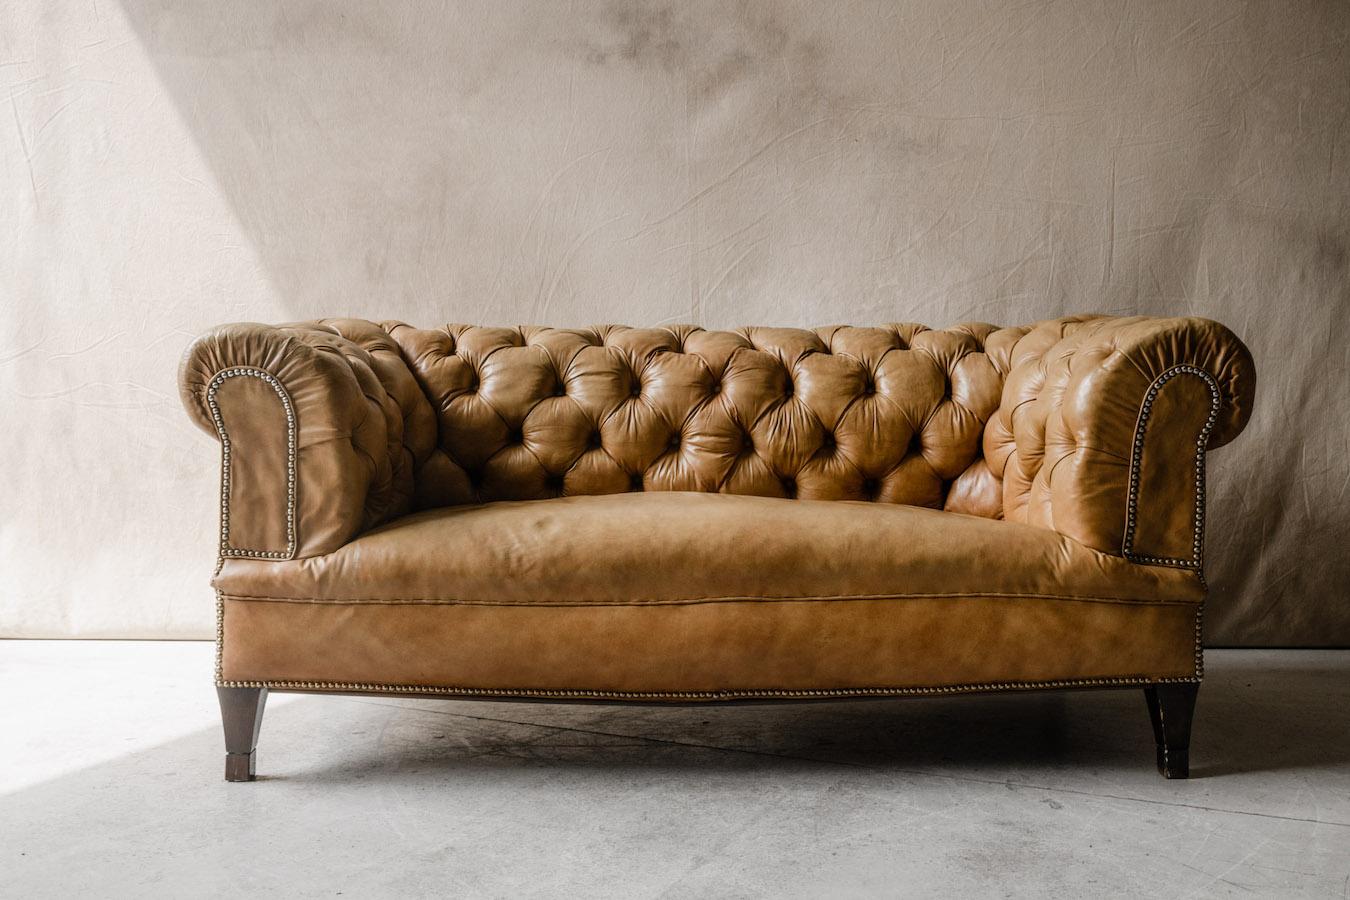 European Vintage Leather Chesterfield Sofa from Denmark, Circa 1950